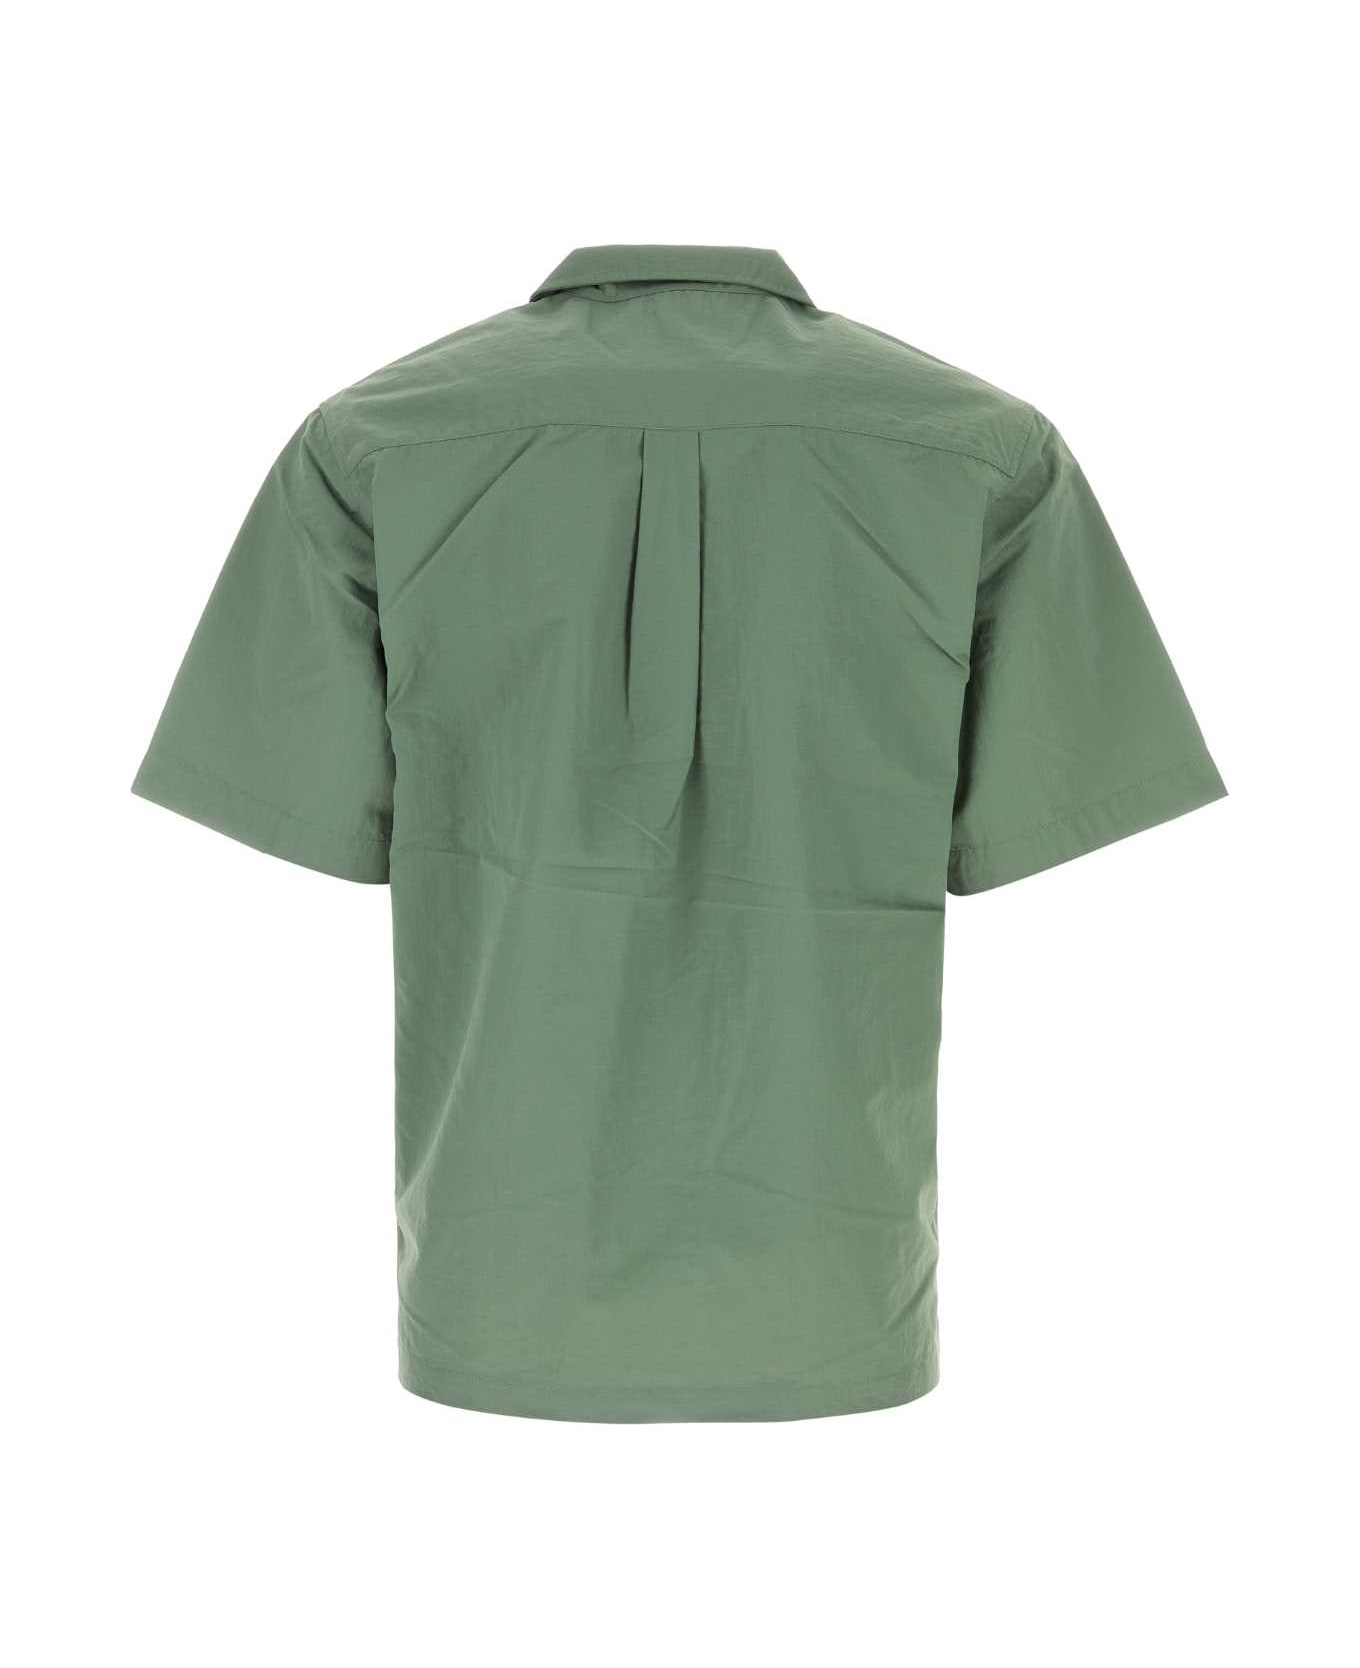 Carhartt Army Green Nylon S/s Evers Shirt - WALL